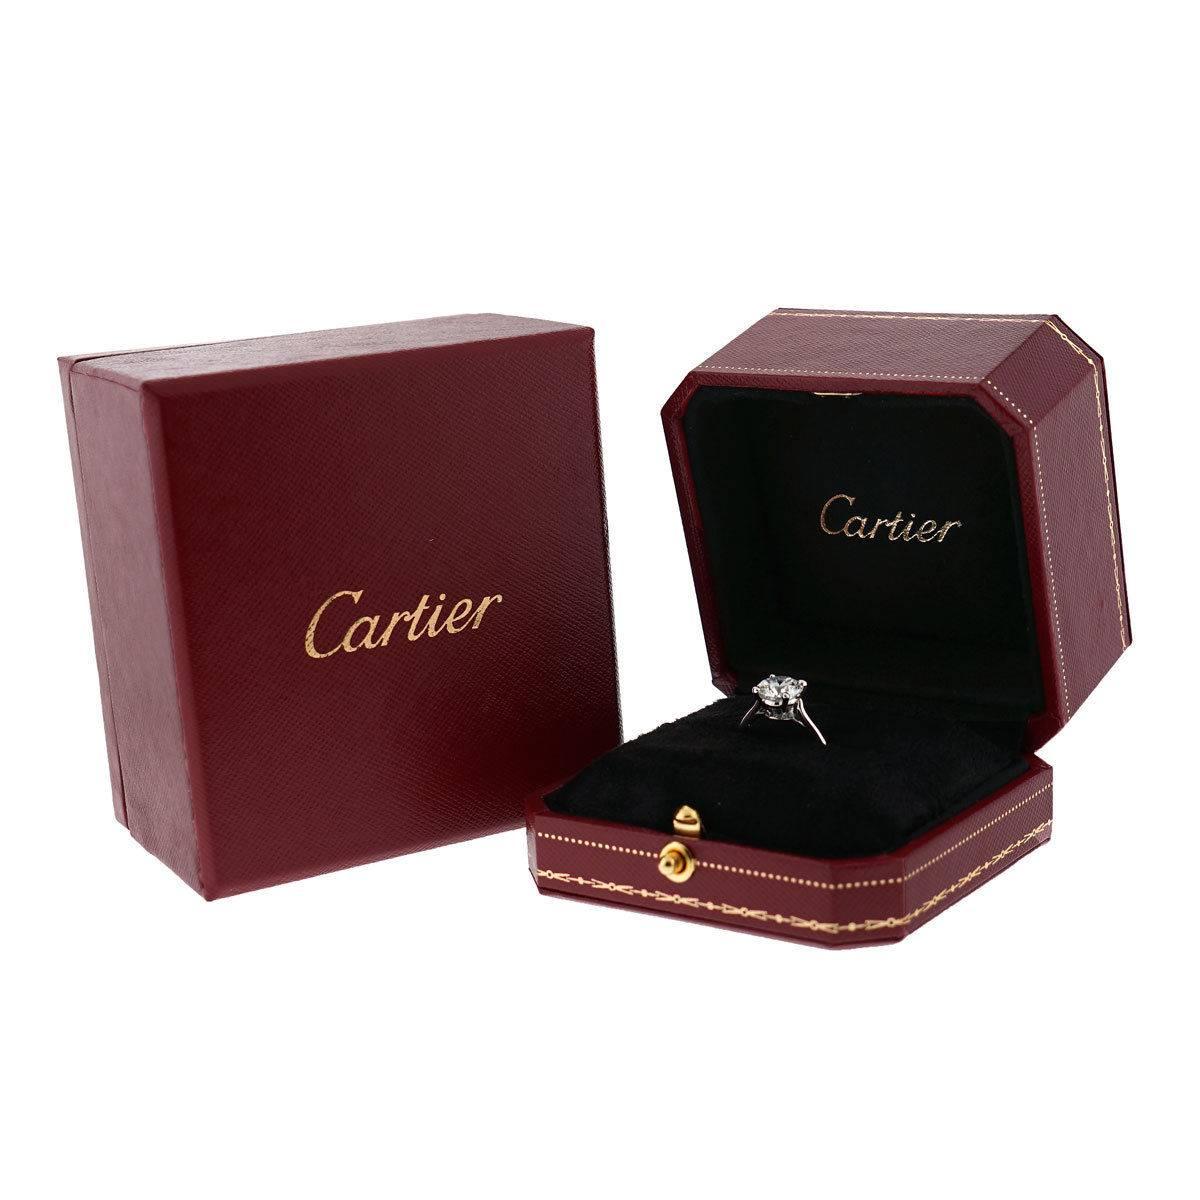 Contemporary Cartier Solitaire 1895 Engagement Ring 2.08 Carat Center HVS1